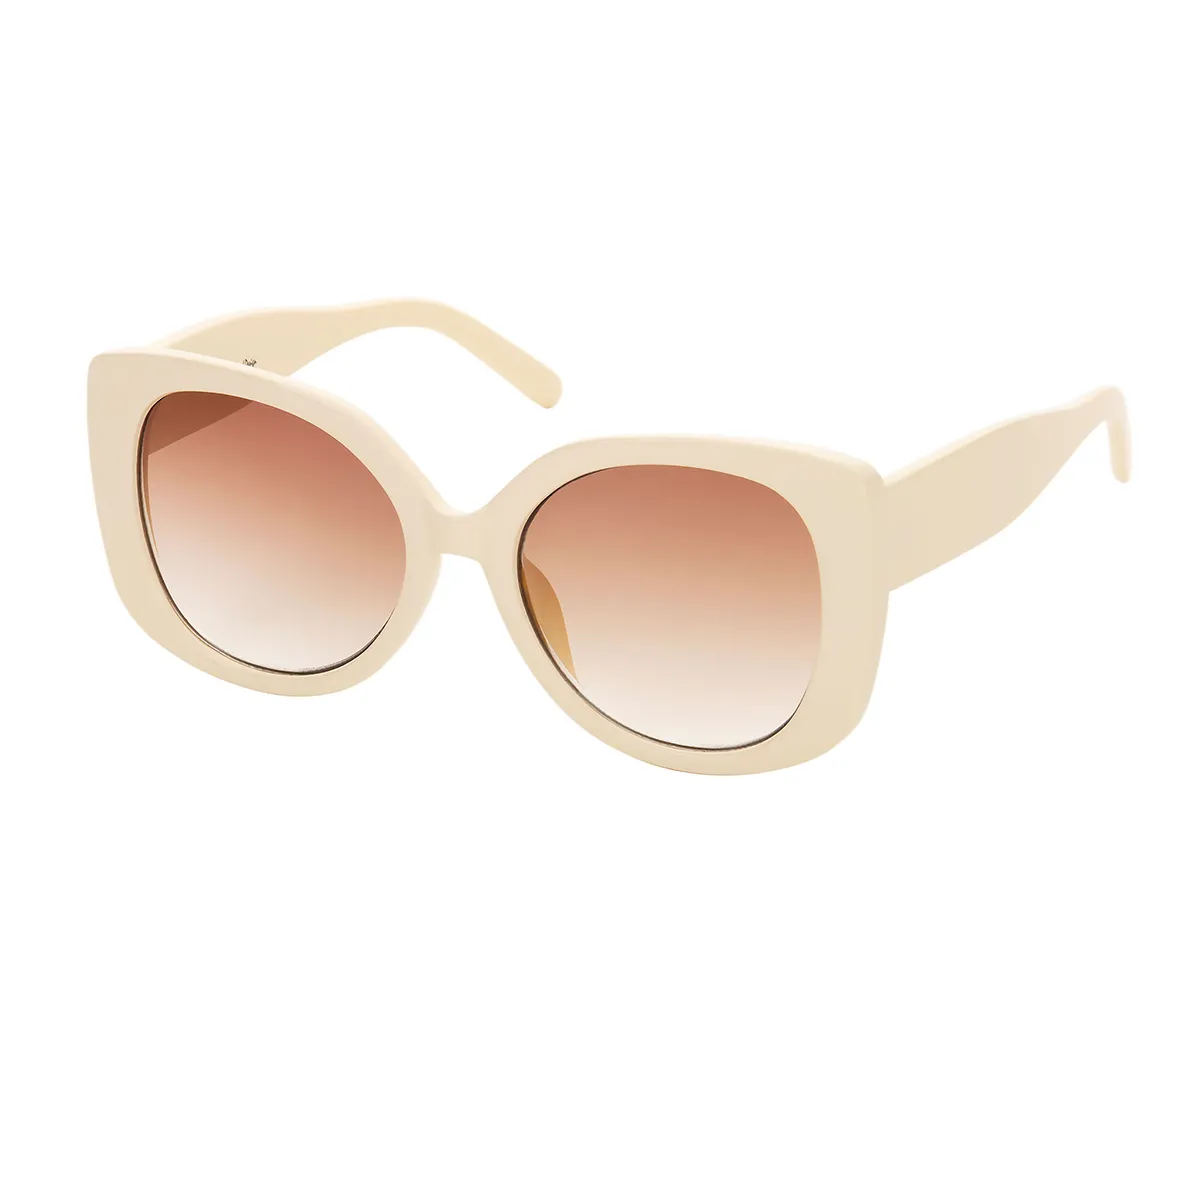 Gaki - Square White Sunglasses for Women